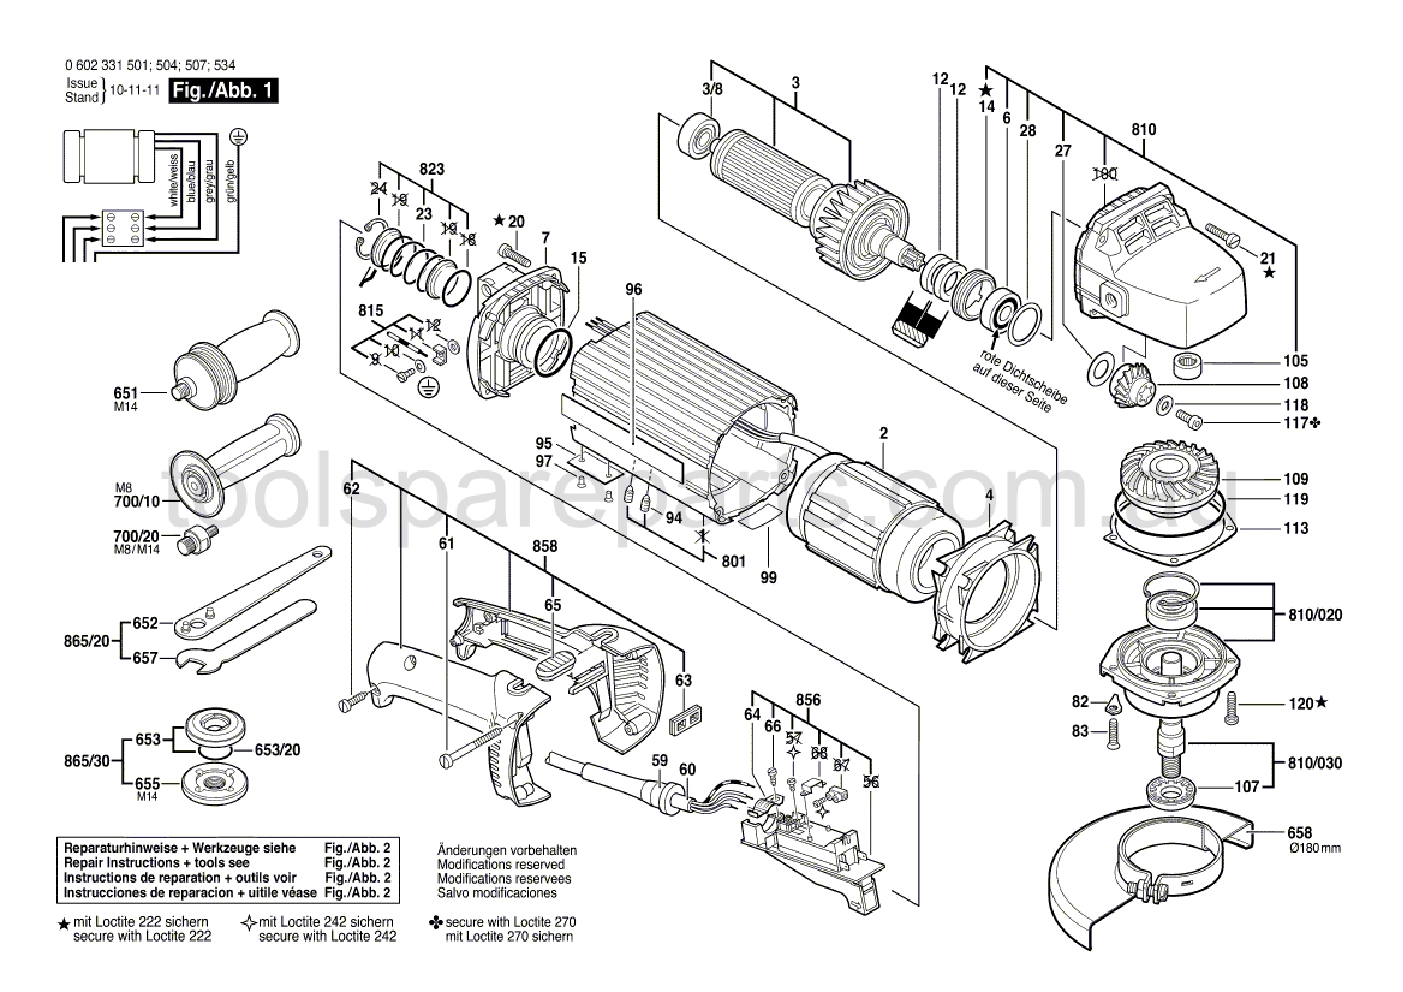 Bosch HWS 88/180 0602331501  Diagram 1